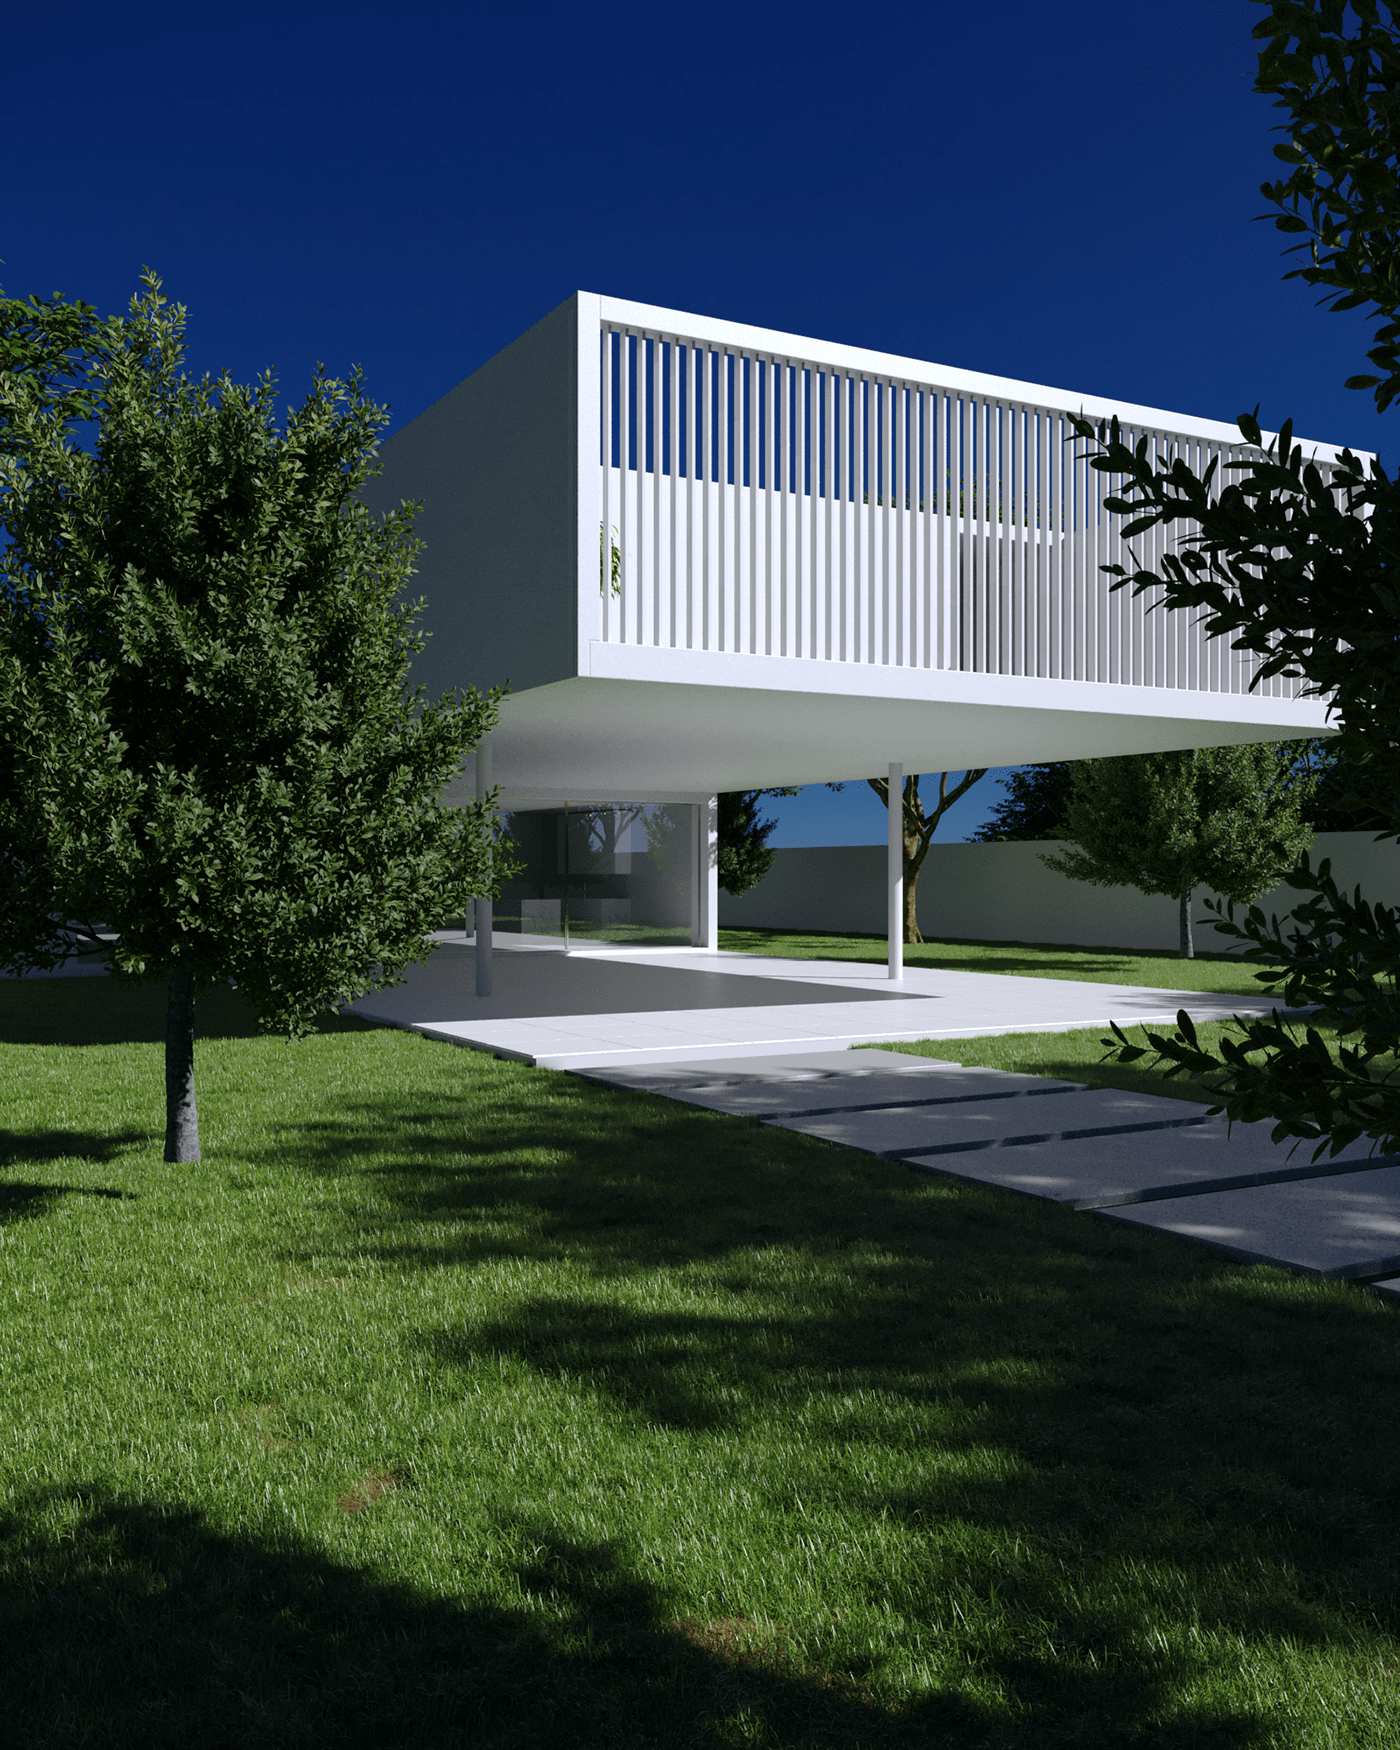 3ds max architecture archviz corona exterior minimalismo modern Render visualização visualization